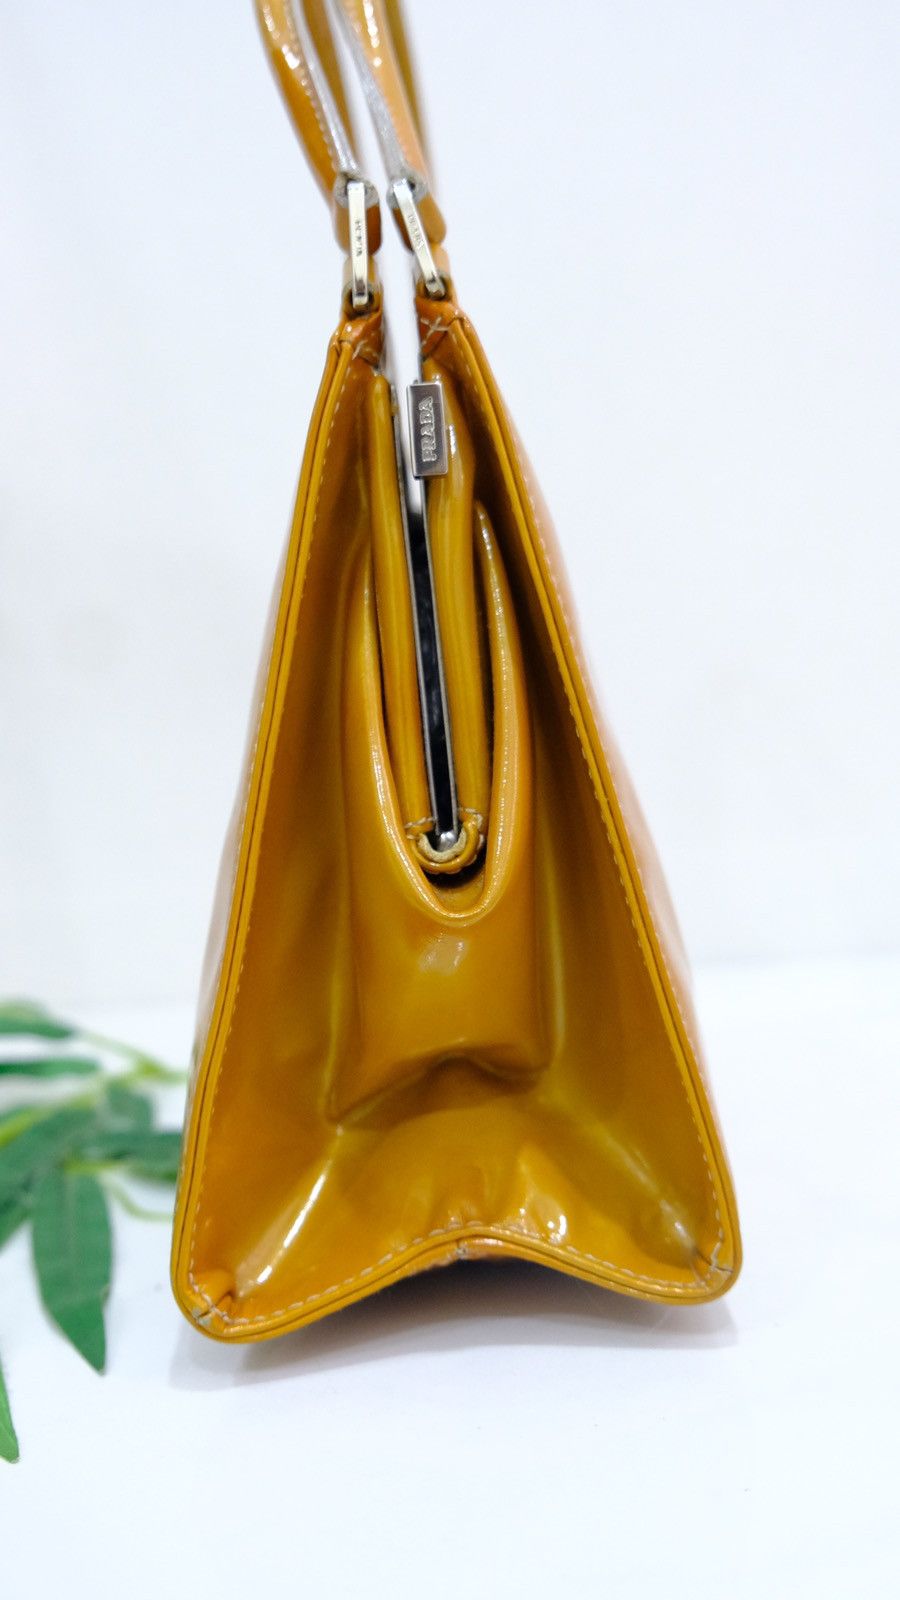 Authentic Prada handbag yellow pattern leather - 4